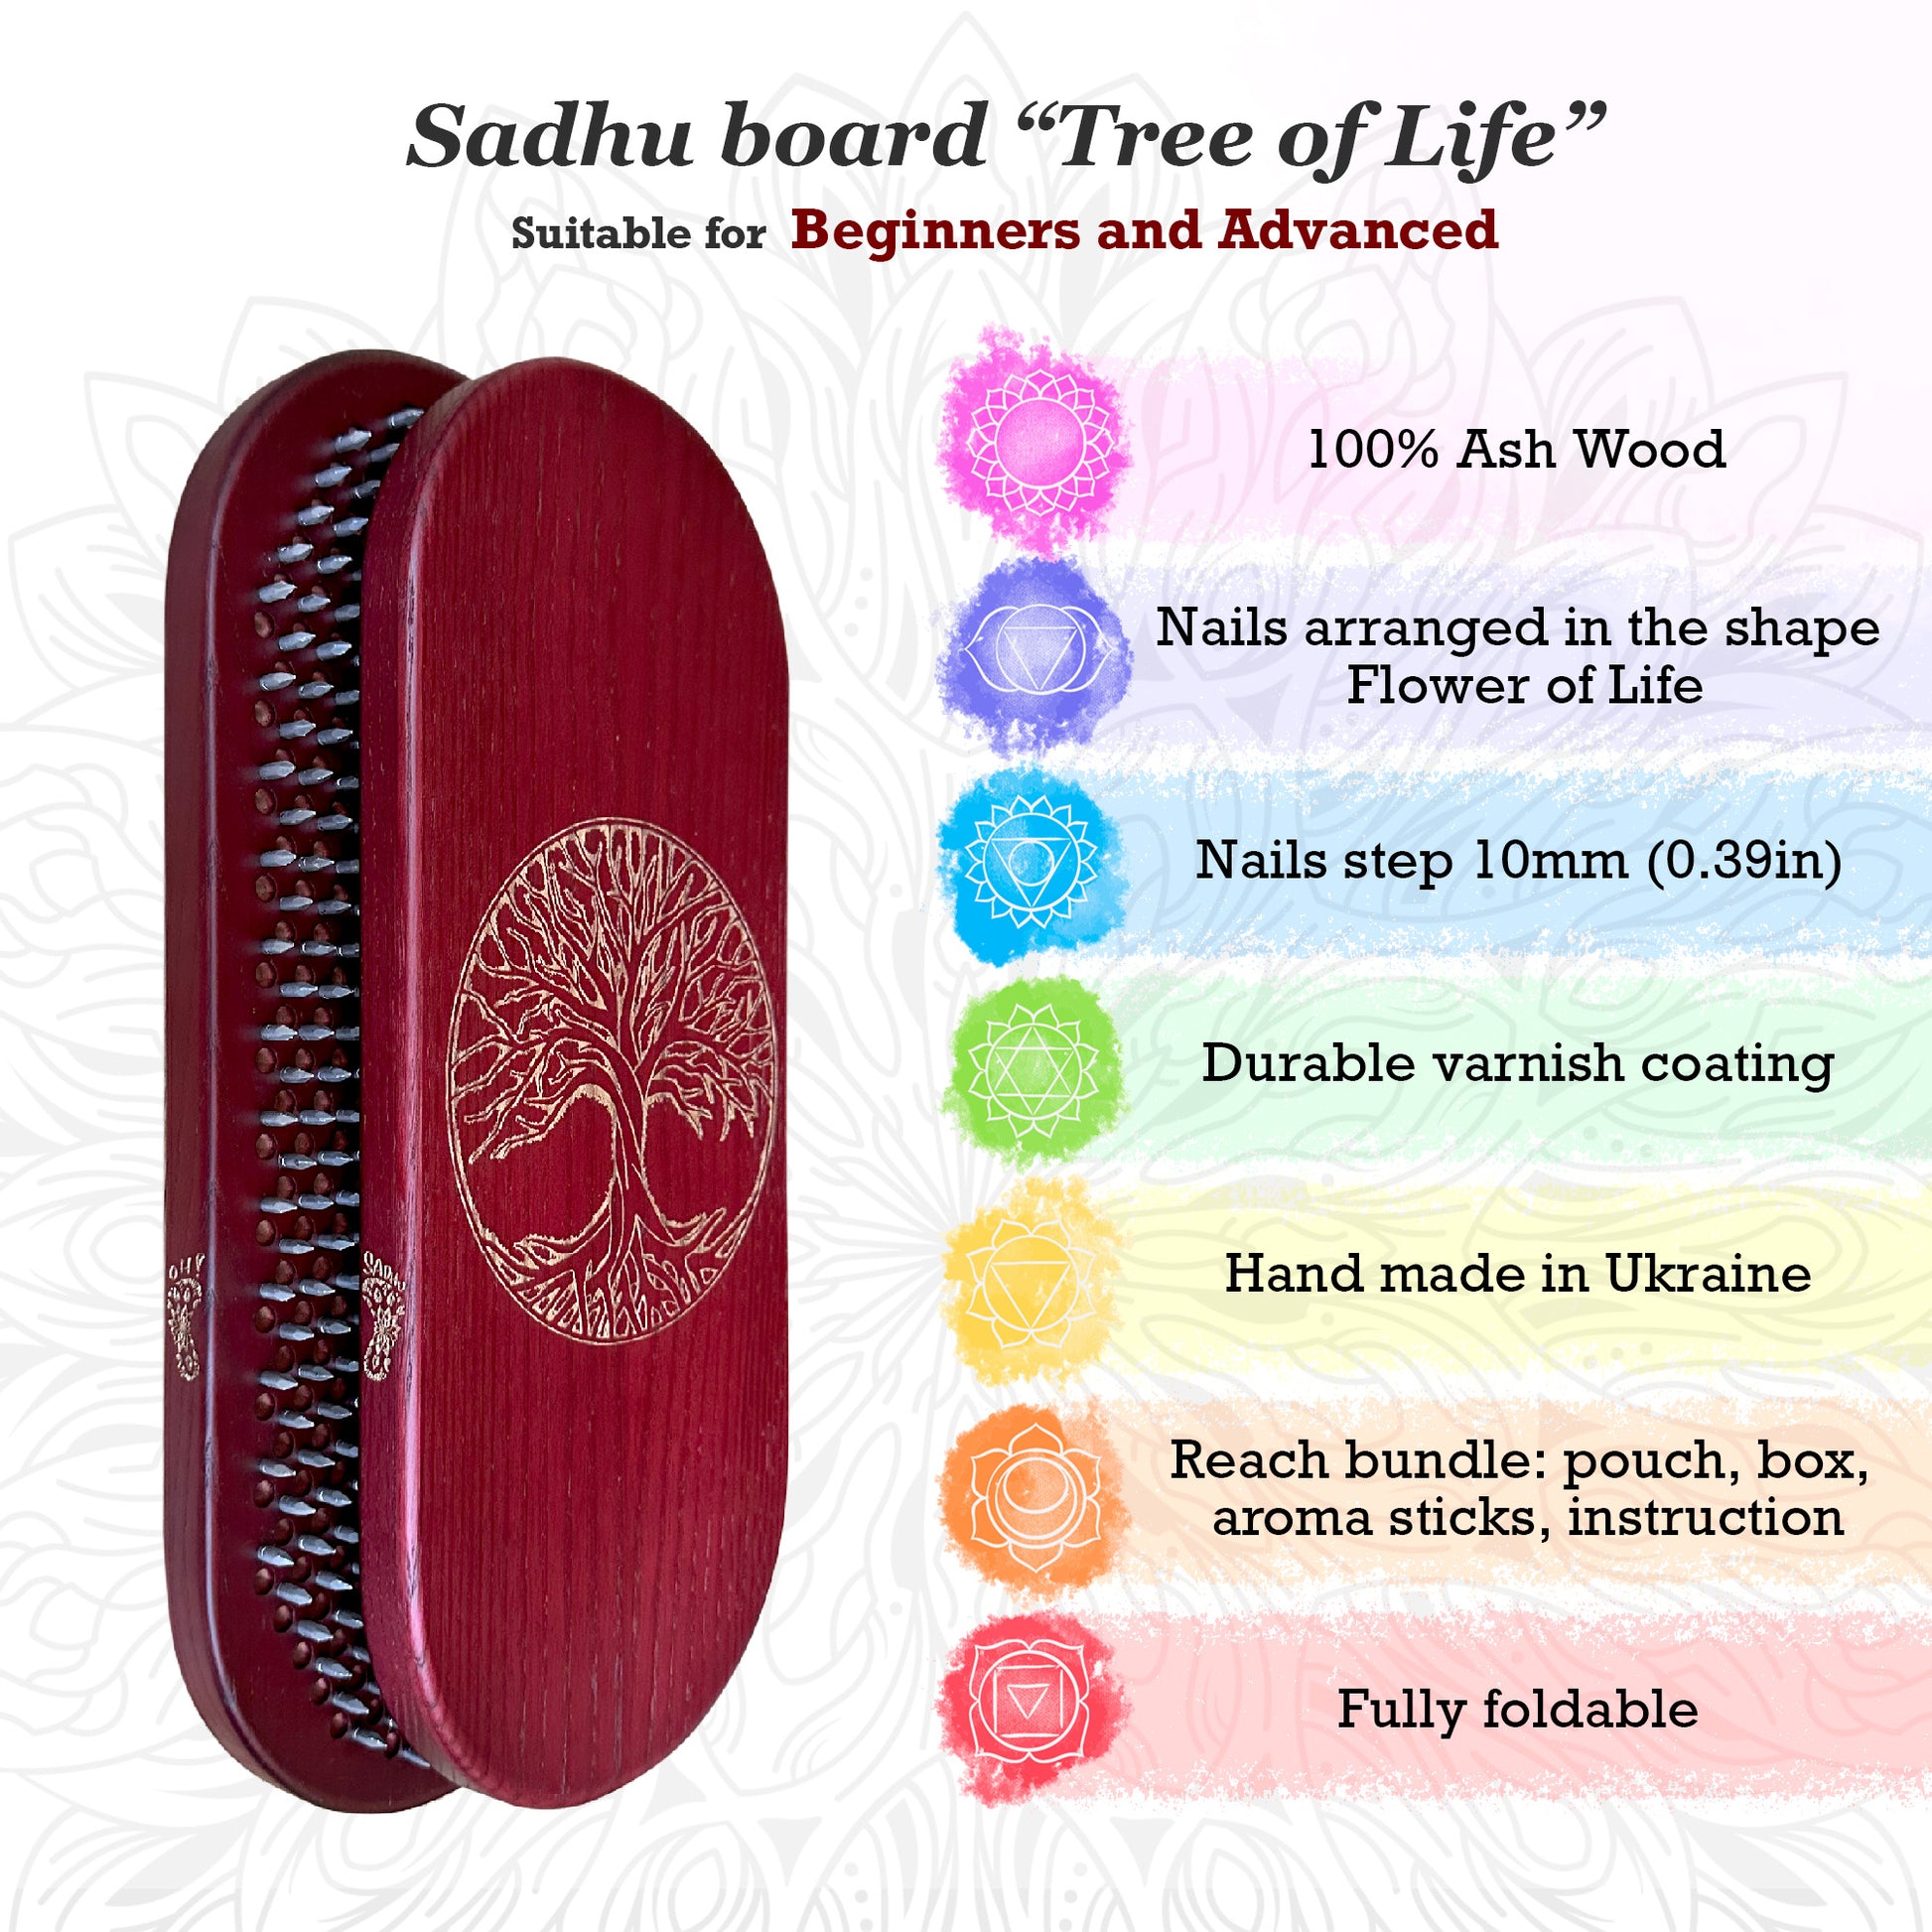 Sadhu board features